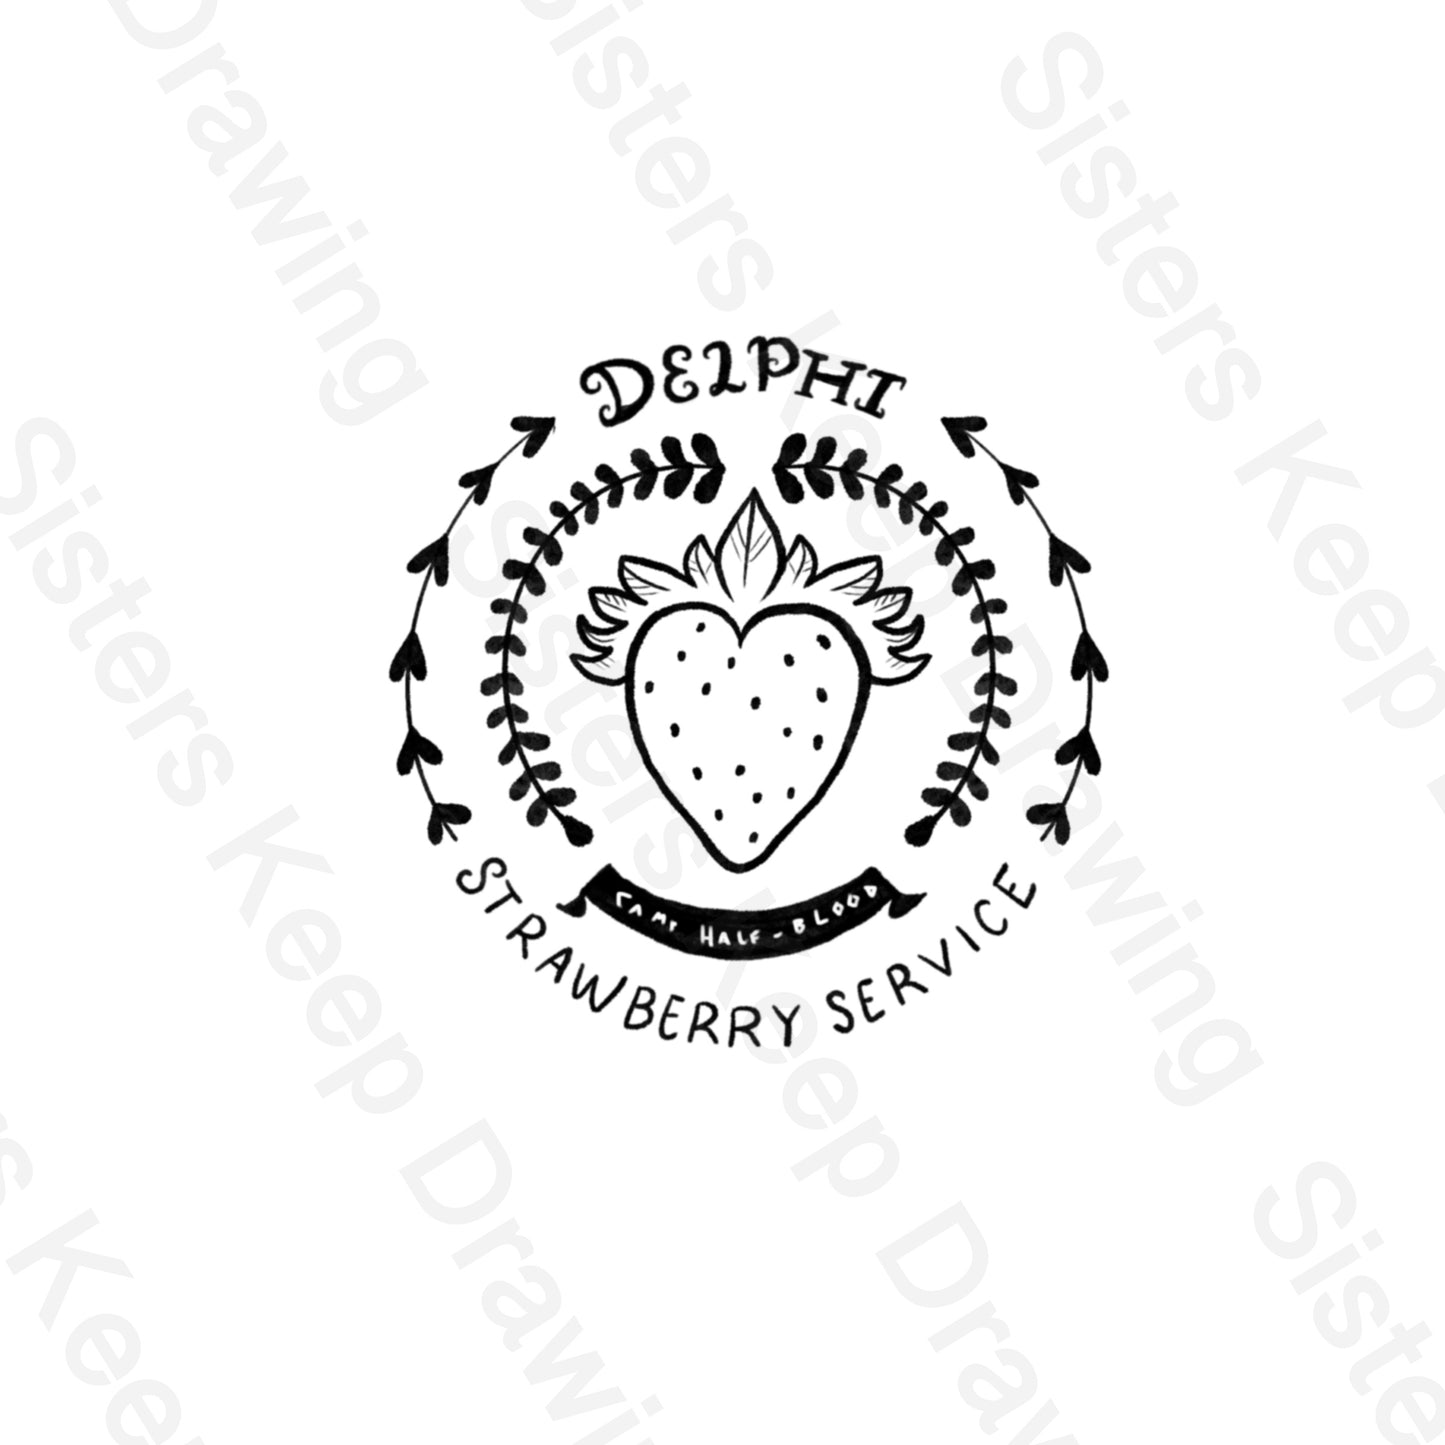 Percy jackson delphi strawberries - Tattoo Transparent Permission PNG